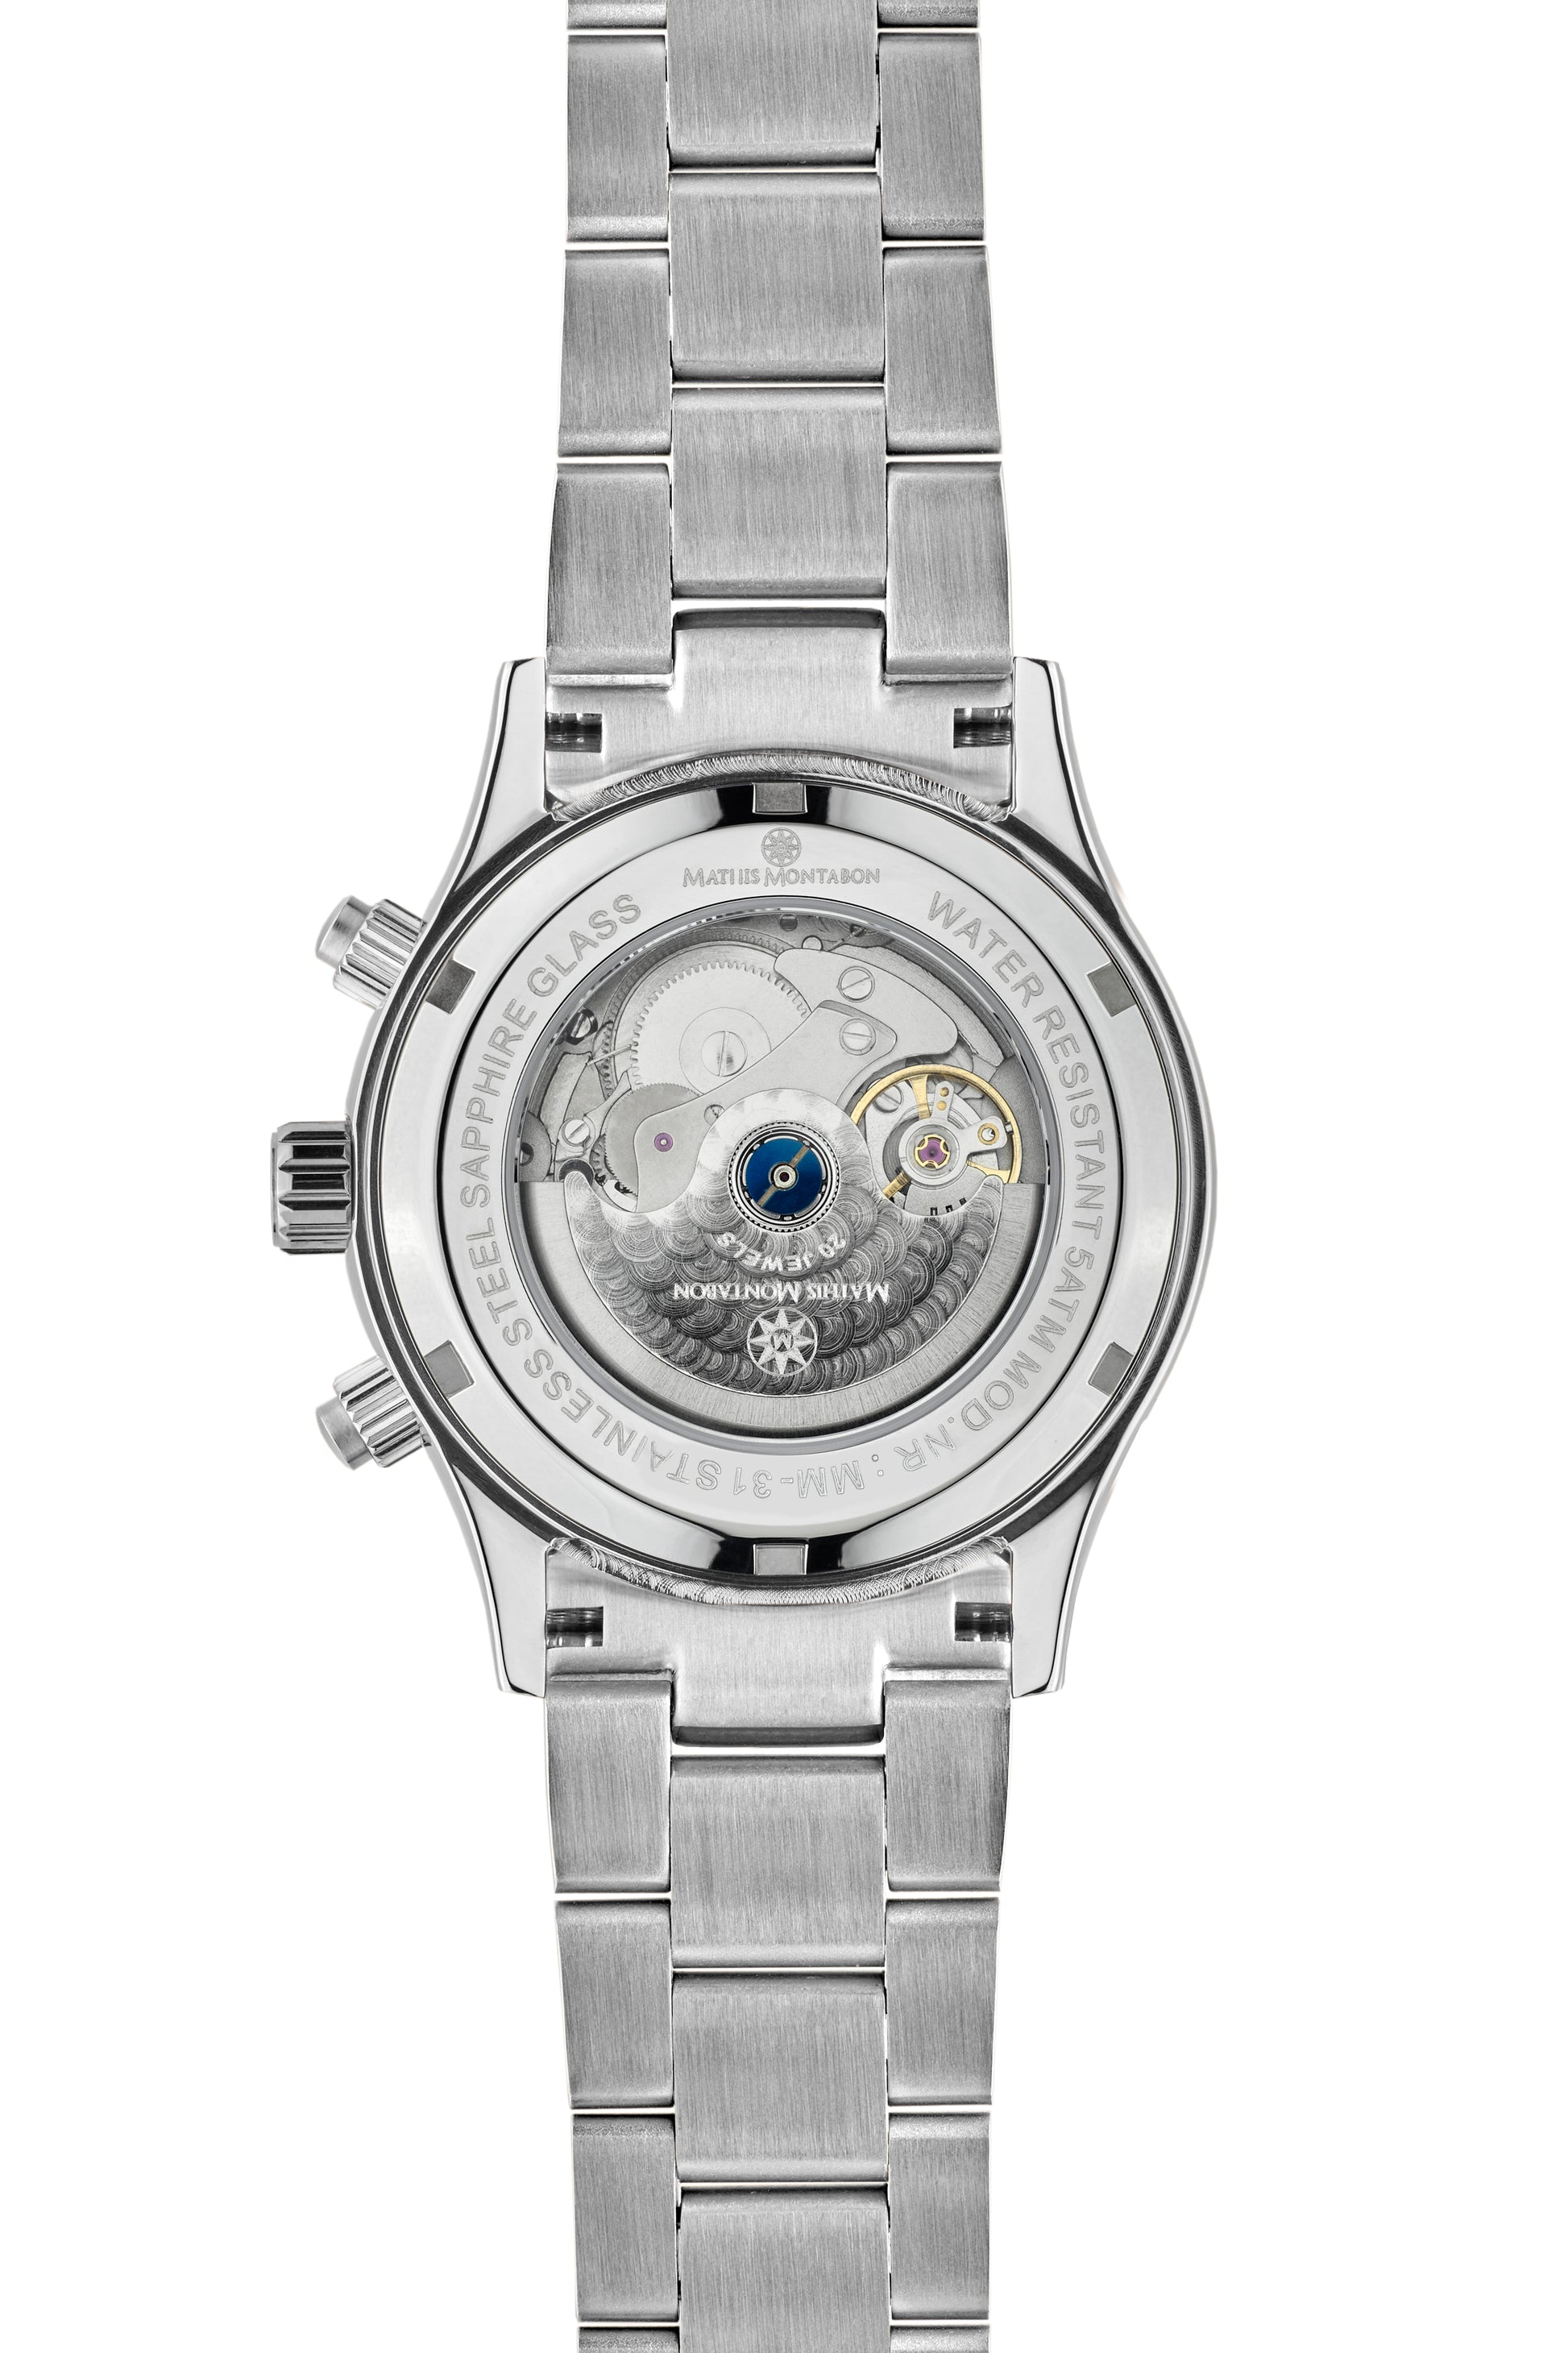 Automatic watches — Aventurier — Mathis Montabon — blau